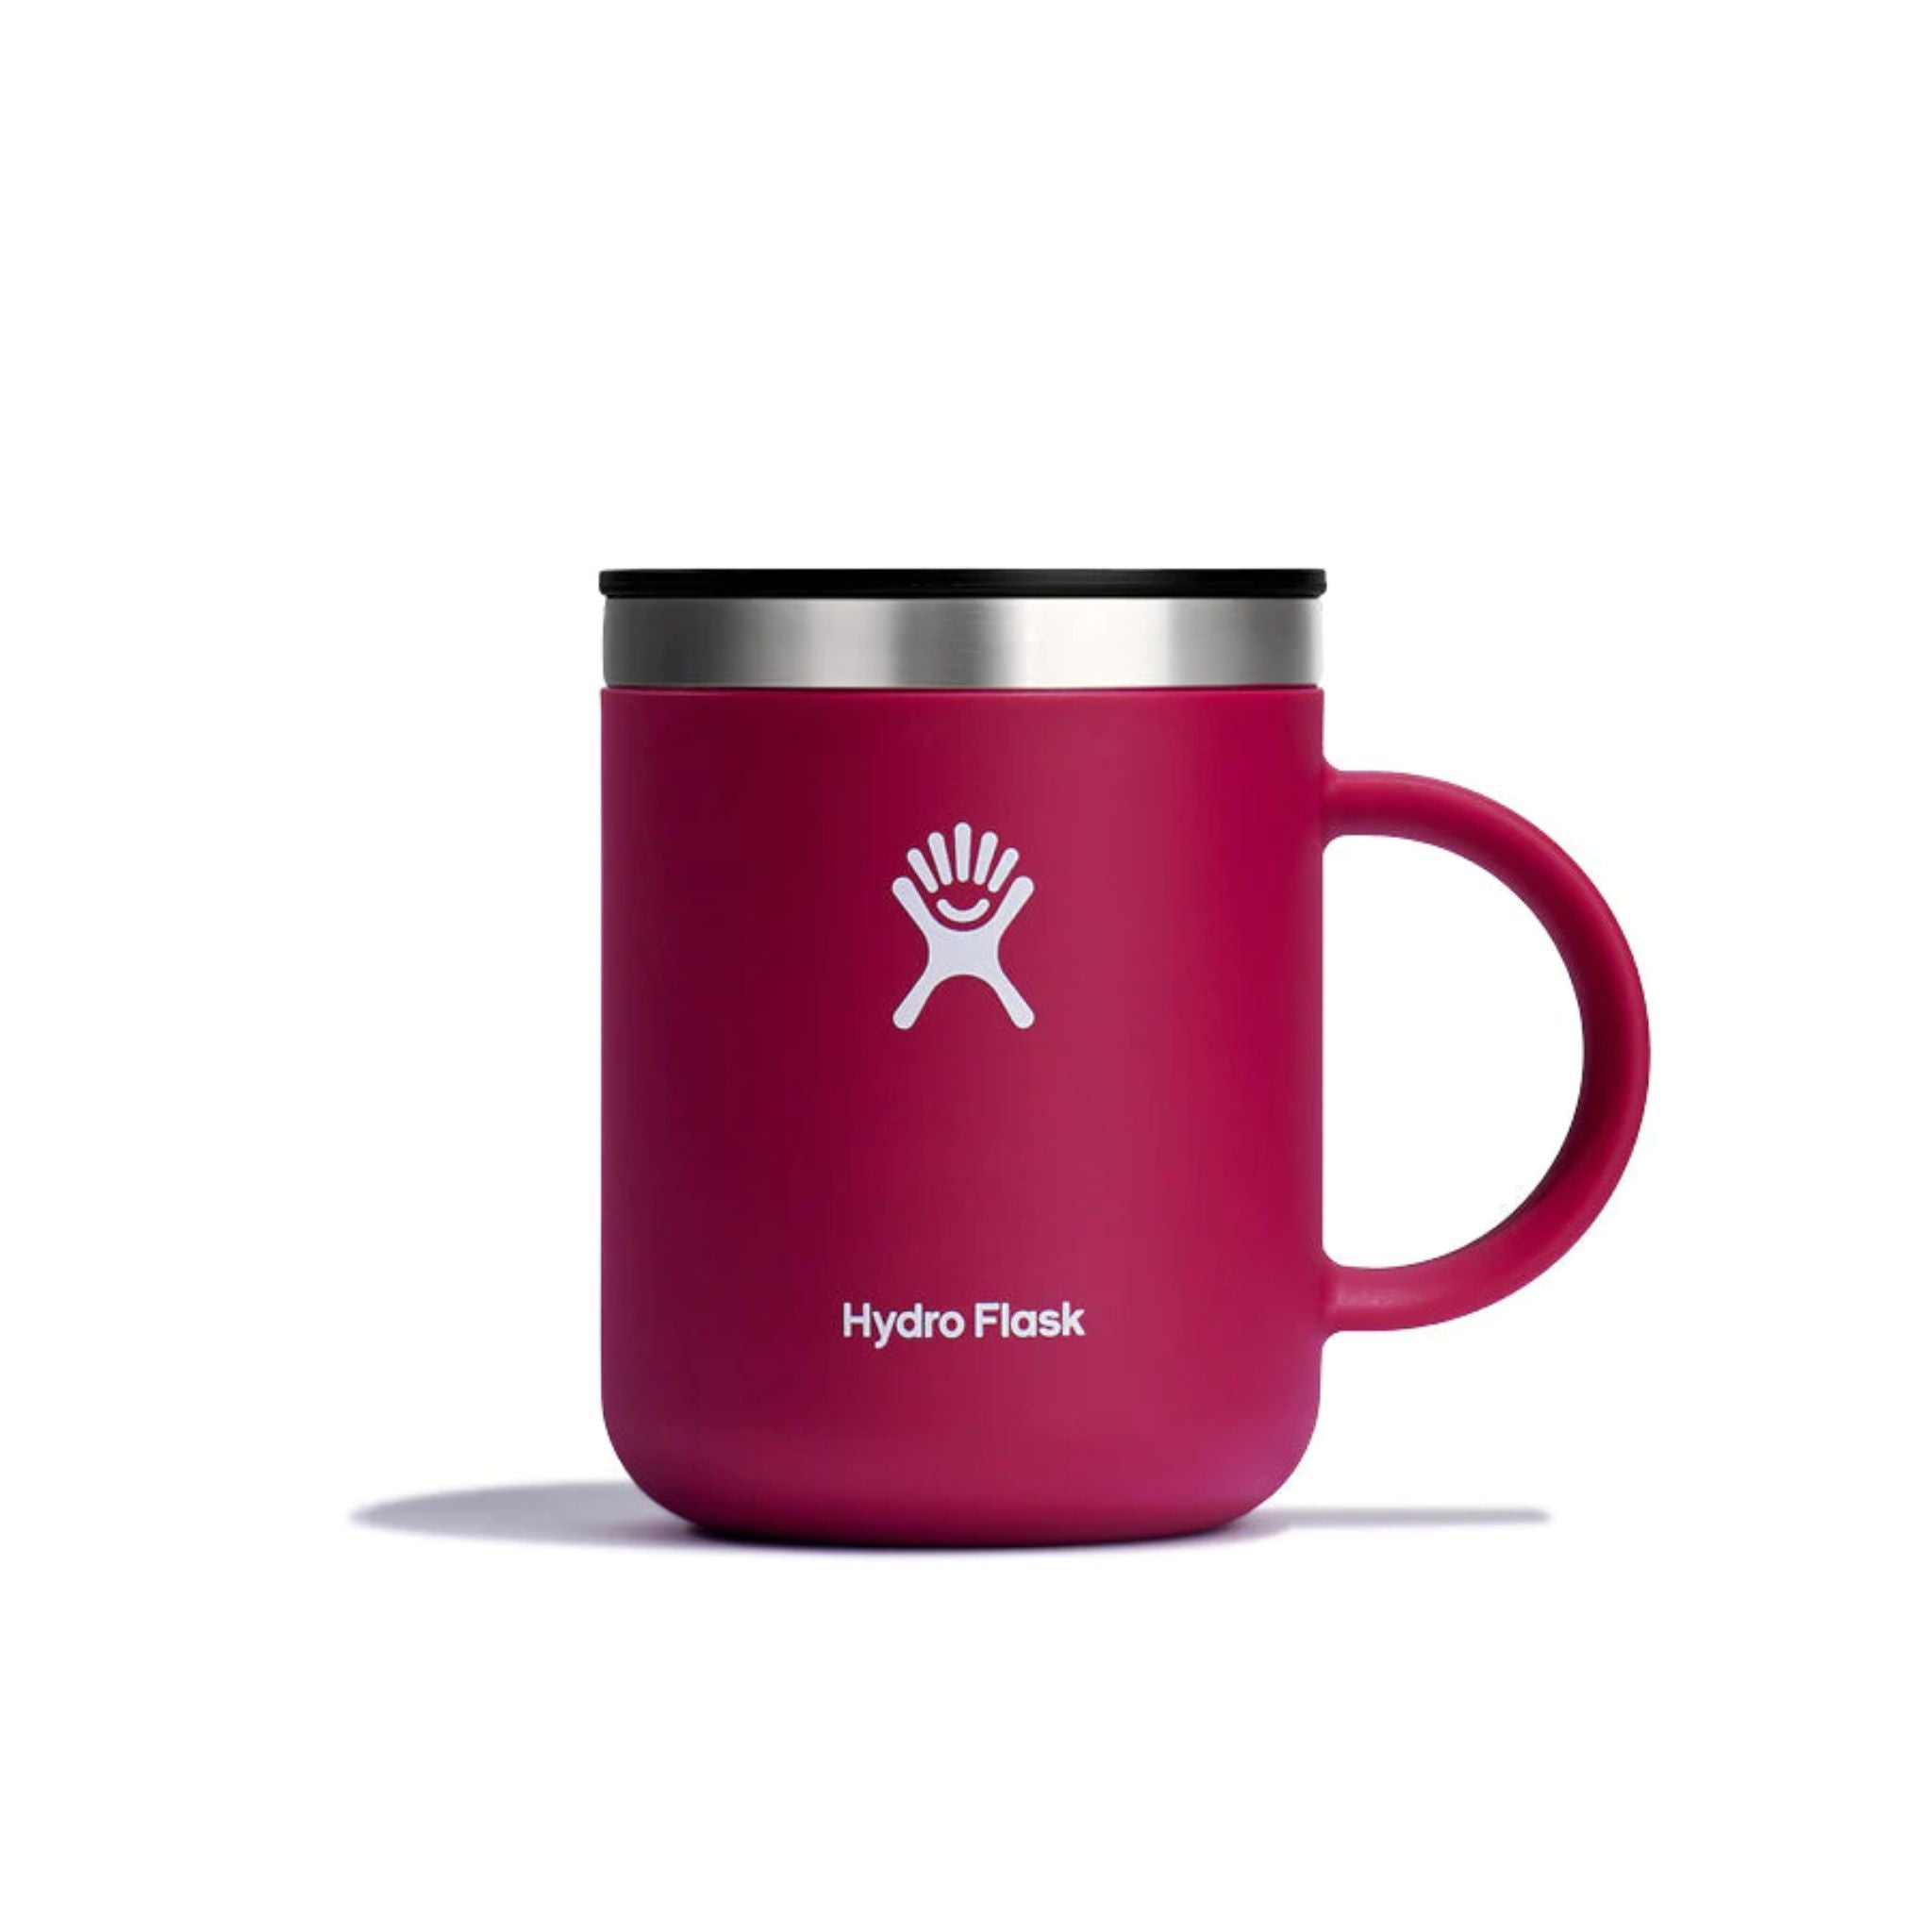 Hydro Flask Cp Coffee Mug 12 Oz/355 Ml - Snapper